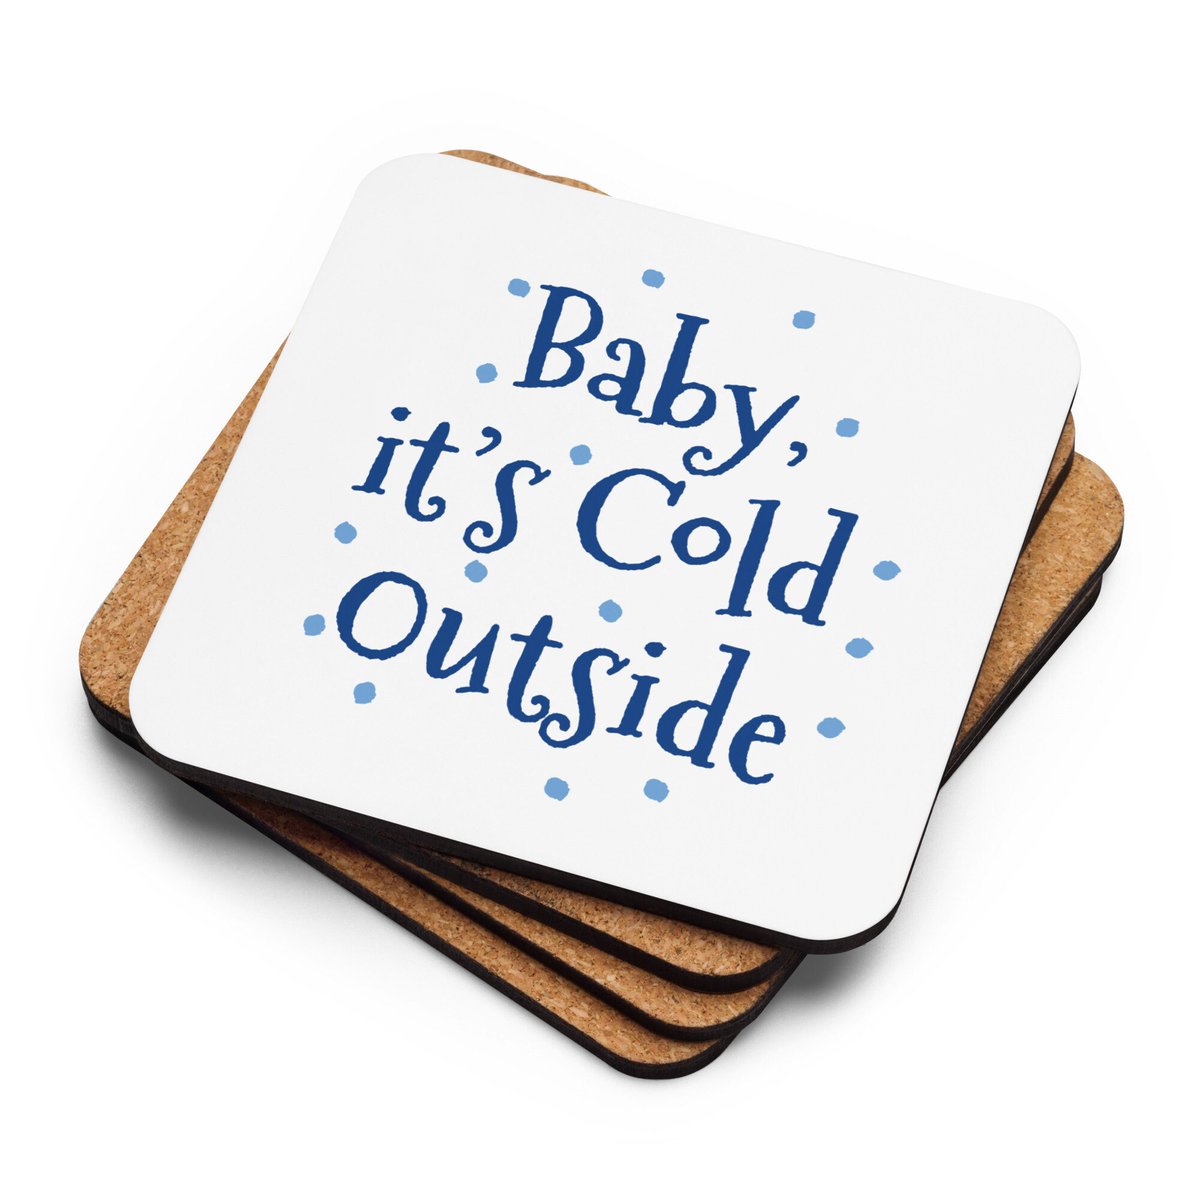 Baby its Cold Outside its cold Cork-back coaster wheezybeez.etsy.com/listing/157531… #GiftsforMom #Etsy #FourthofJuly #MothersDay #EtsyShop #MemorialDay #FathersDay #HandmadeGifts #GiftGiving